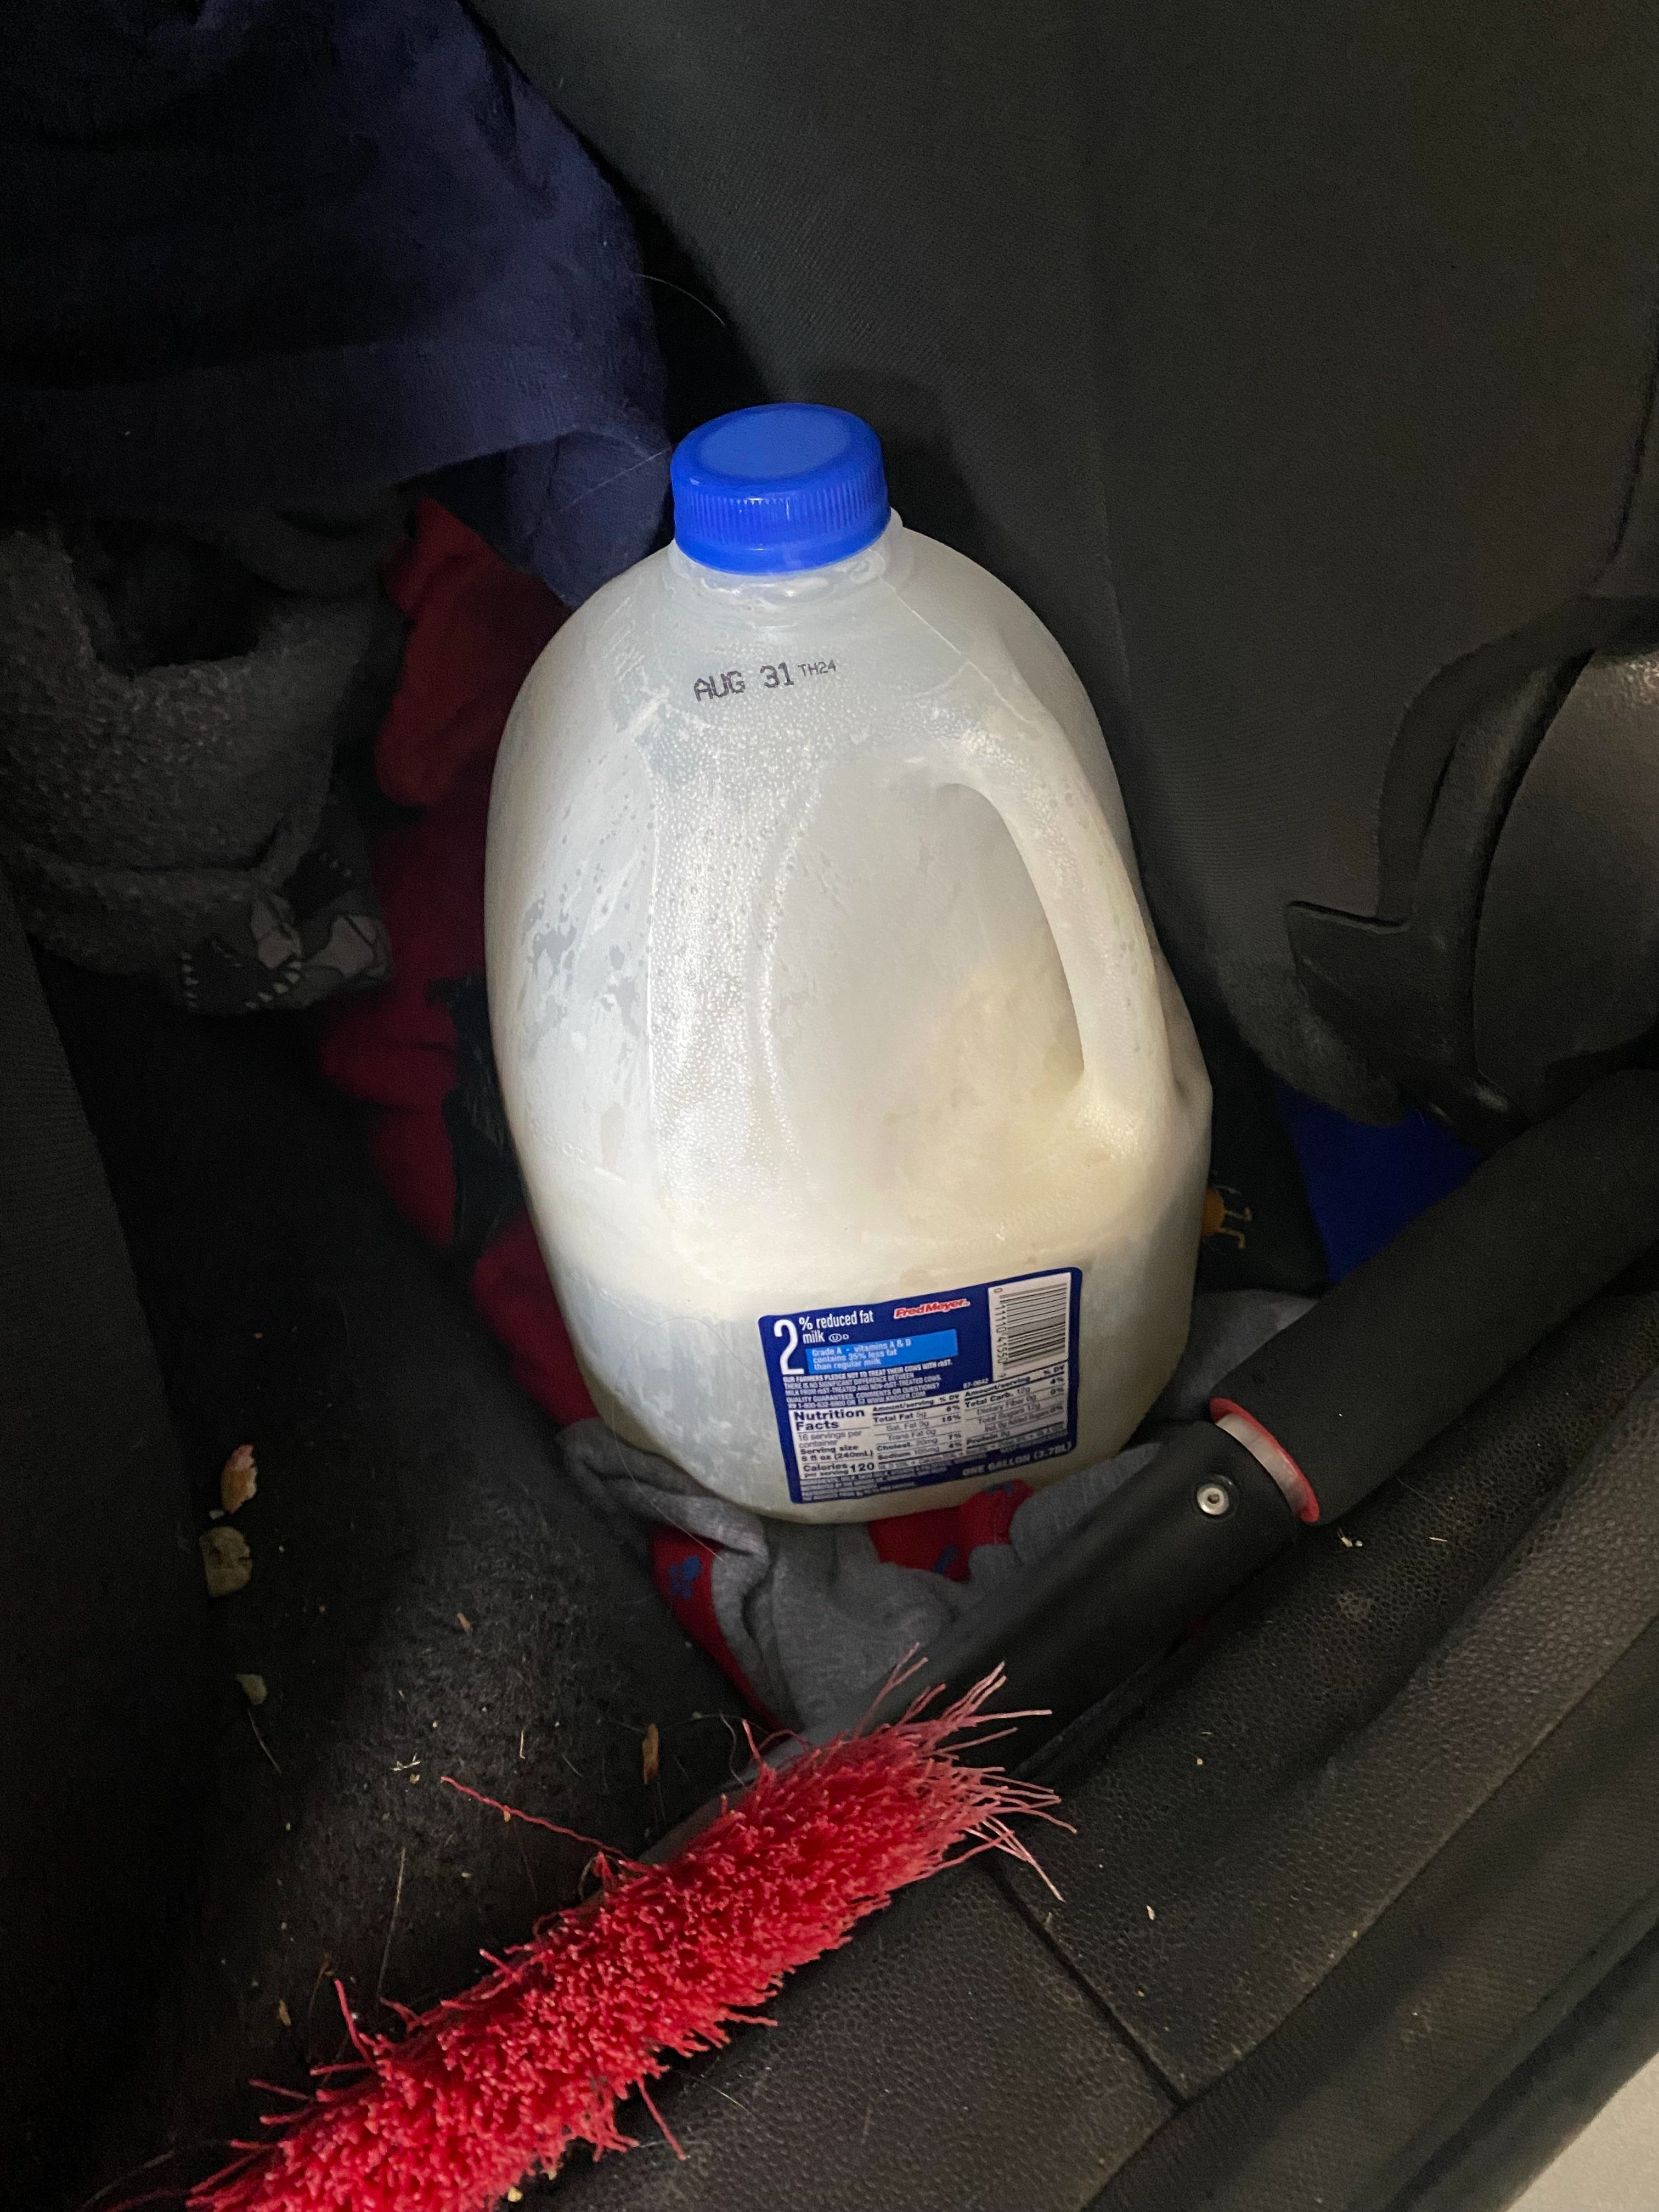 Spilled milk in a car